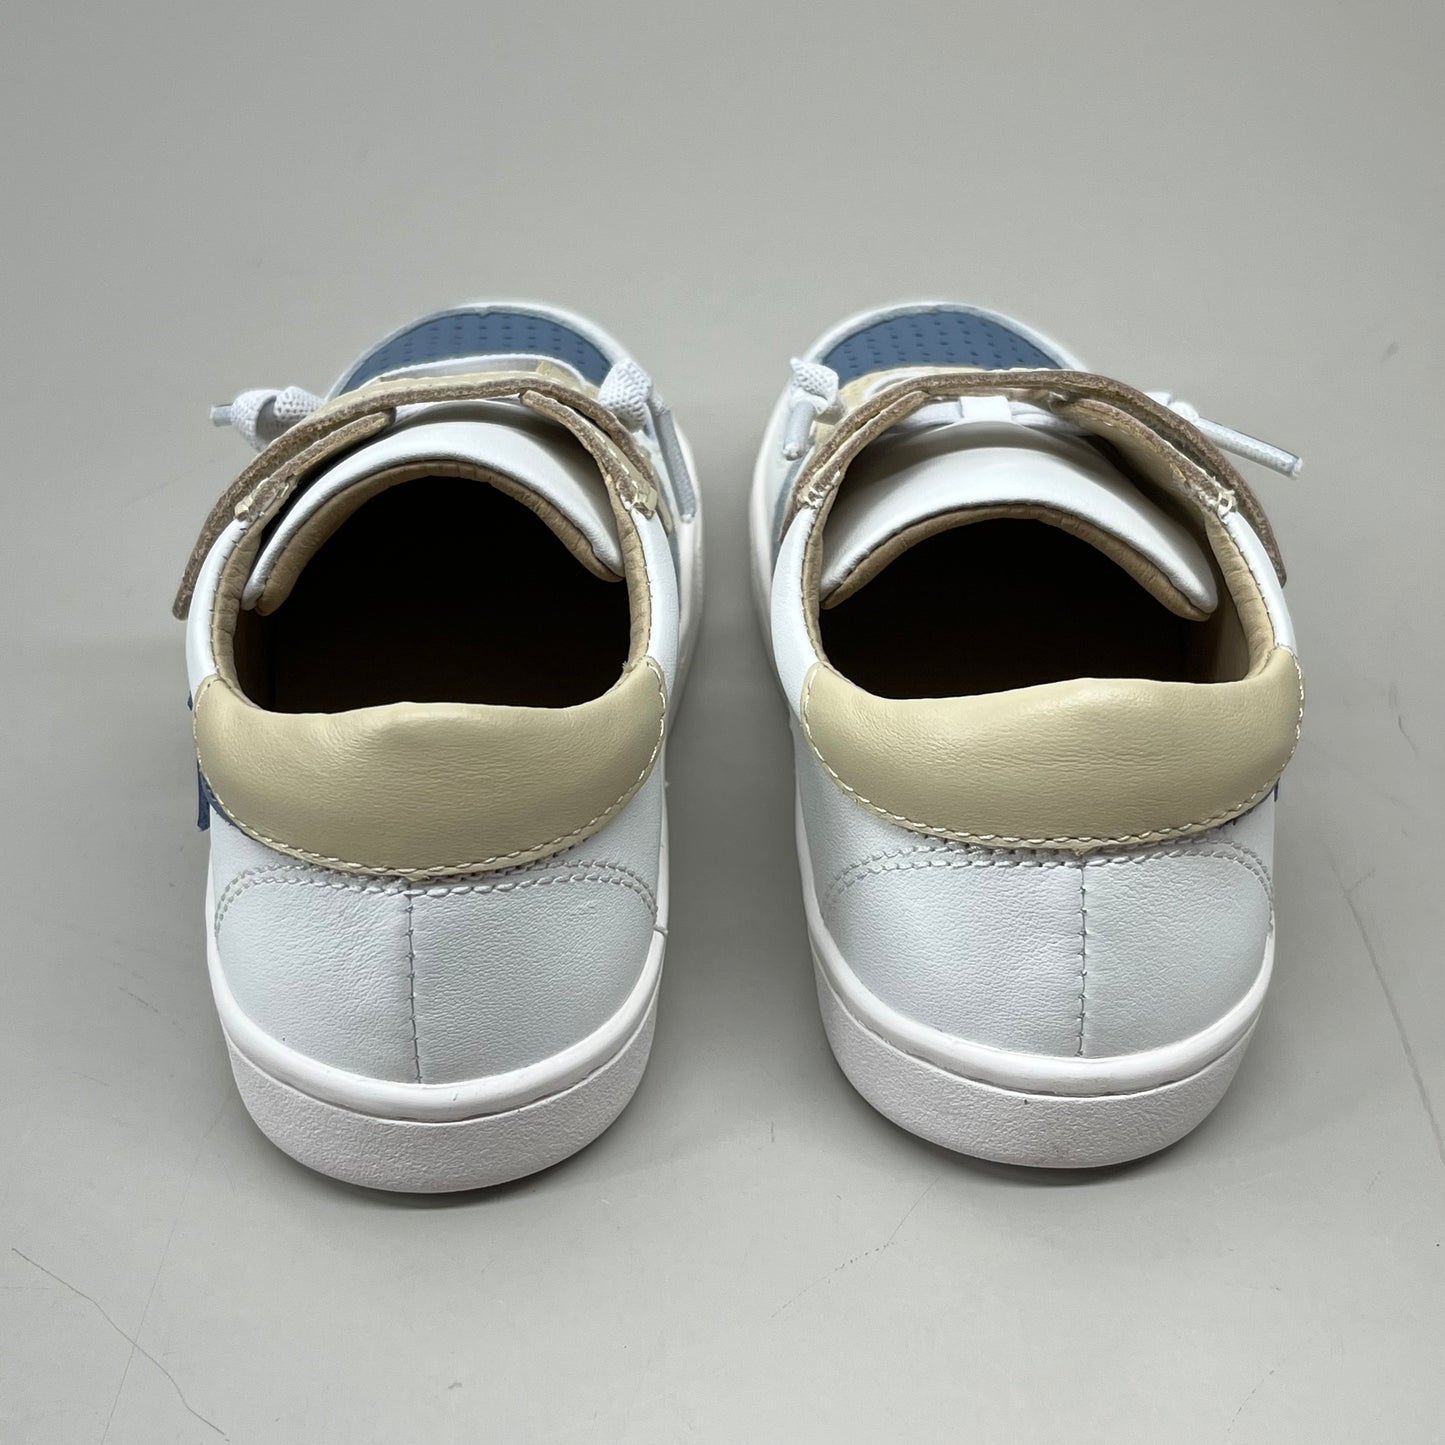 OLD SOLES Runsky Sneakers Leather Shoe Kid’s Sz 28 US 11 Cream/Indigo/Snow #6135